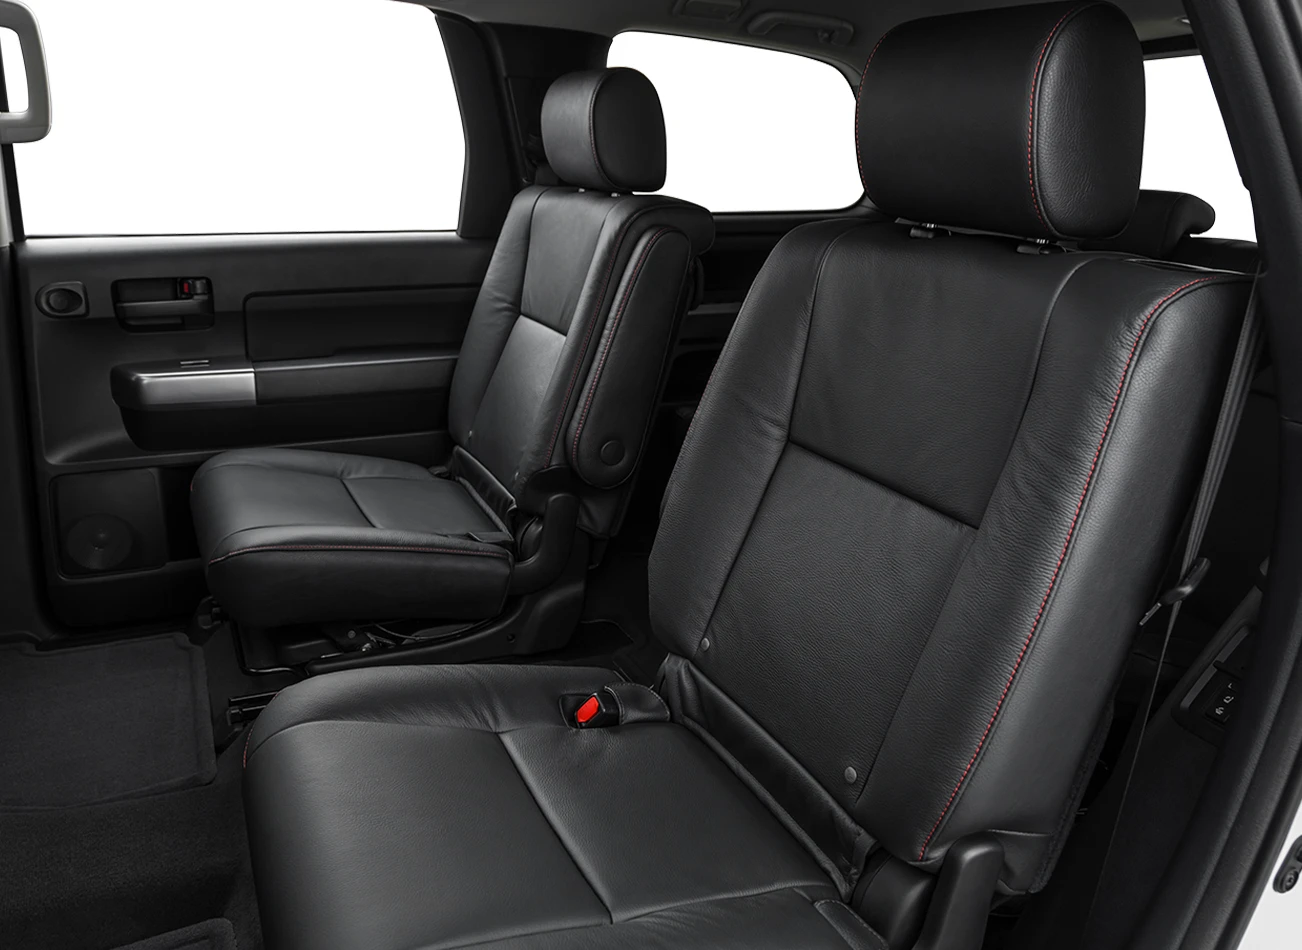  2020 Toyota Suquoia: Passenger seats | CarMax